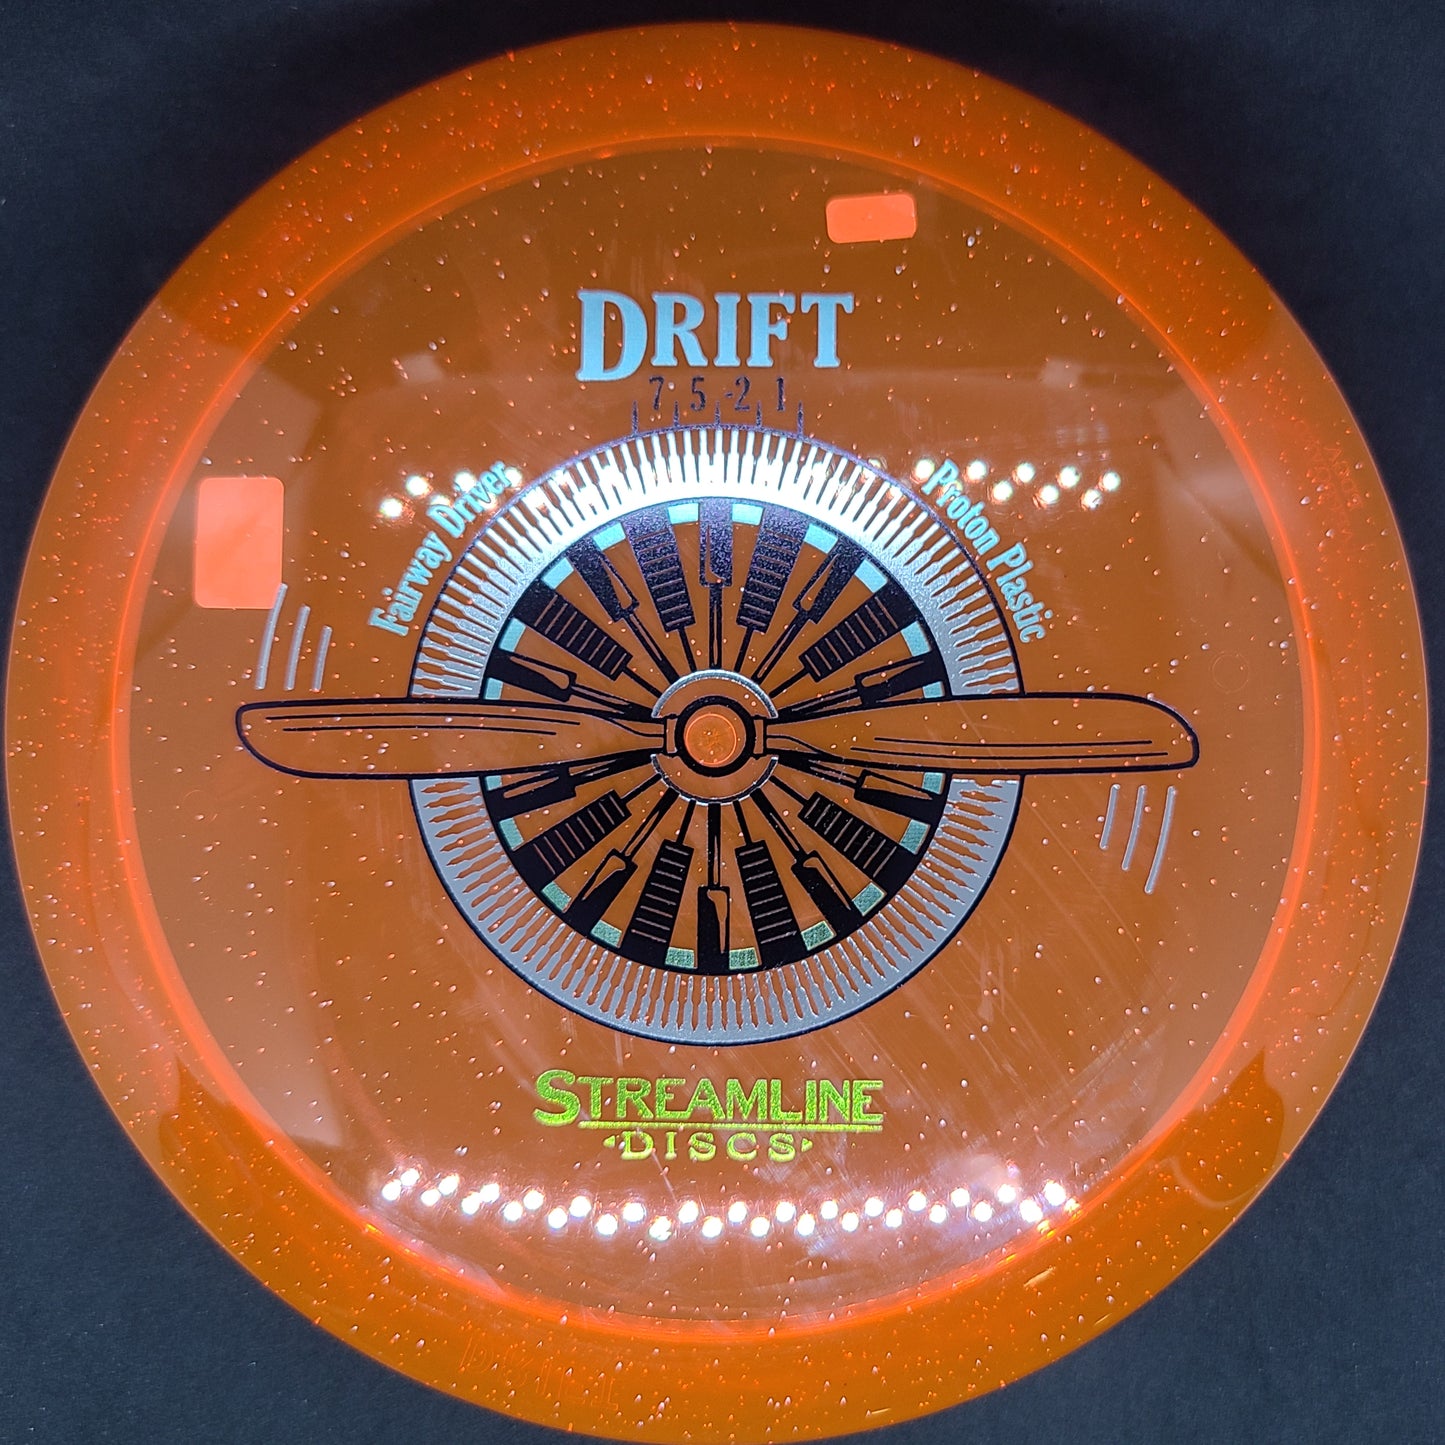 Streamline - Drift - Proton